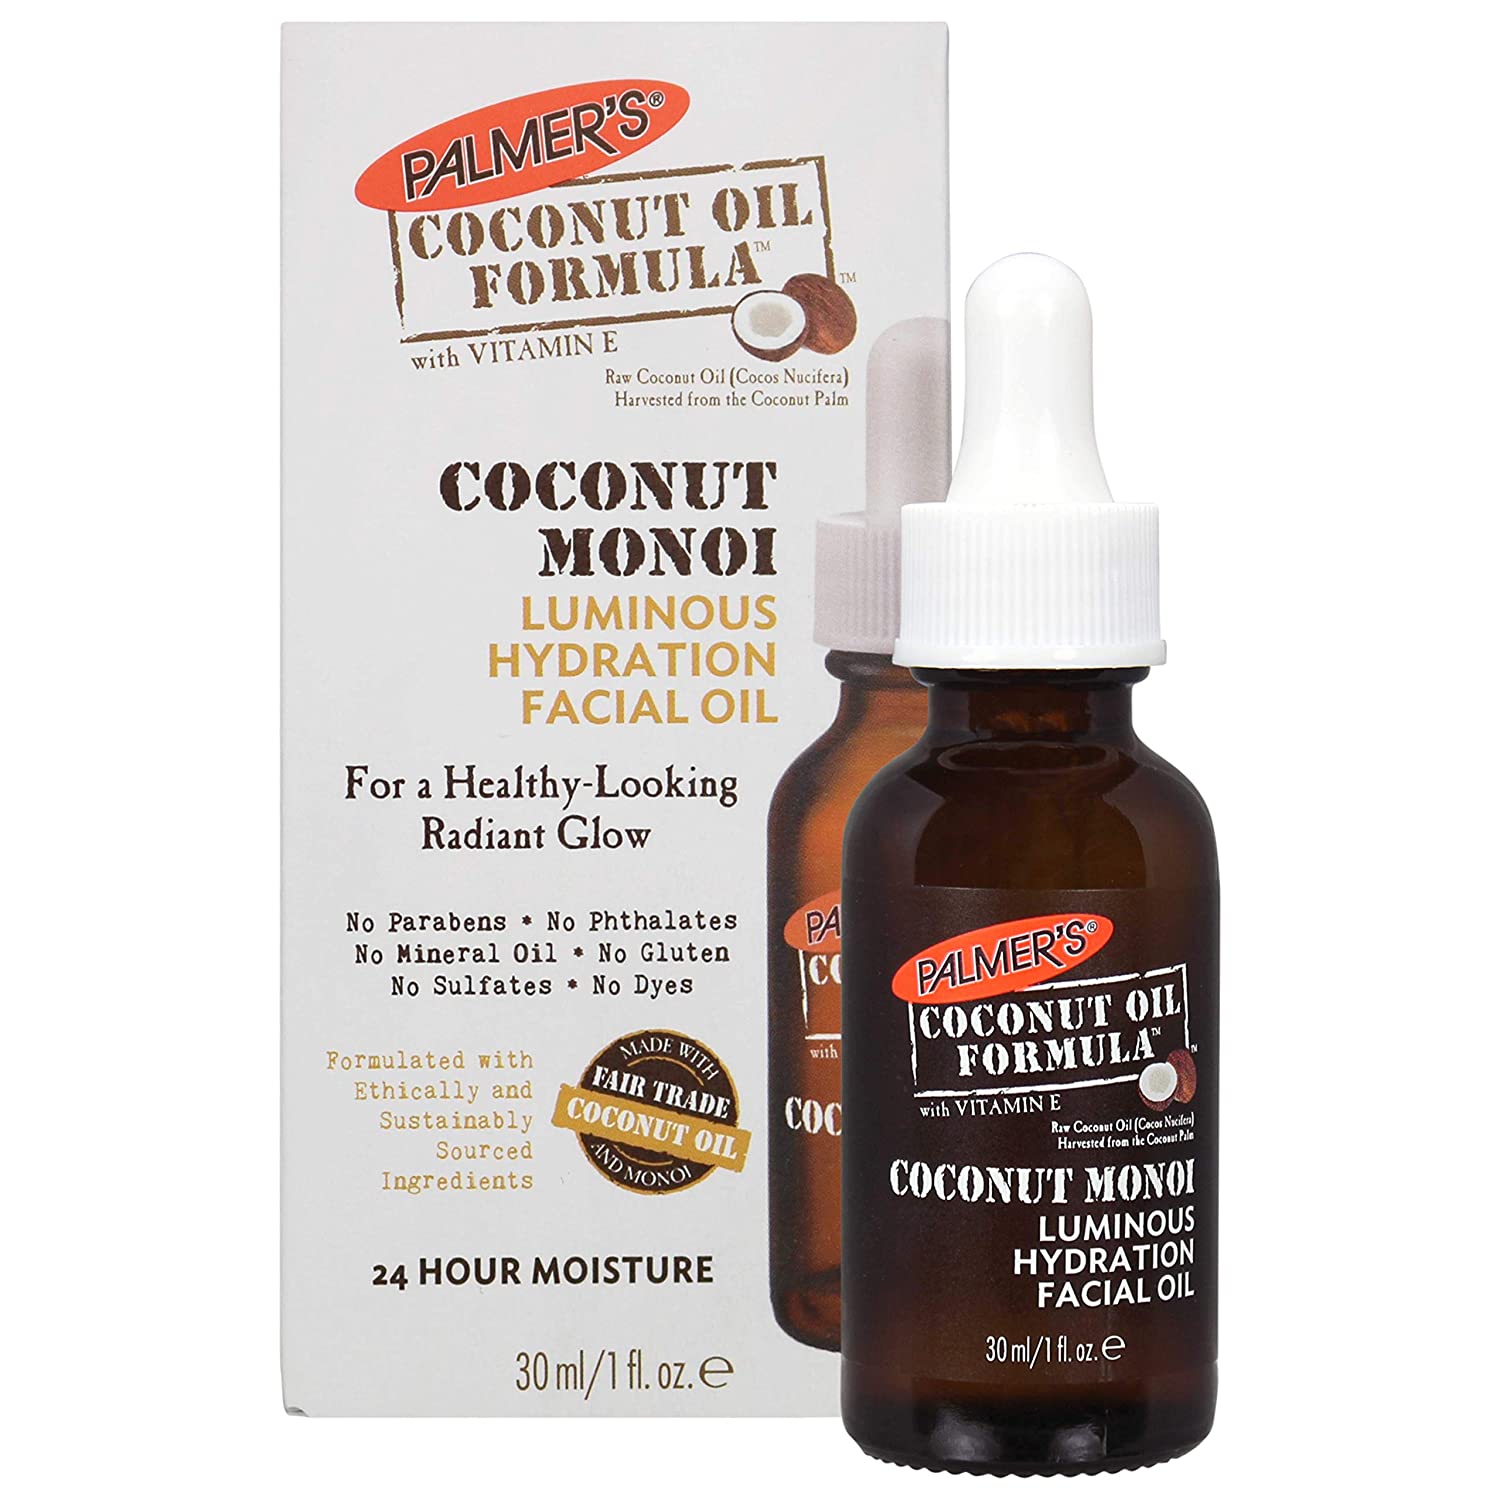 Palmer’s Coconut Oil Formula Coconut Monoi Luminous Hydration Facial Oil 1oz $4.54 (REG $11.99)